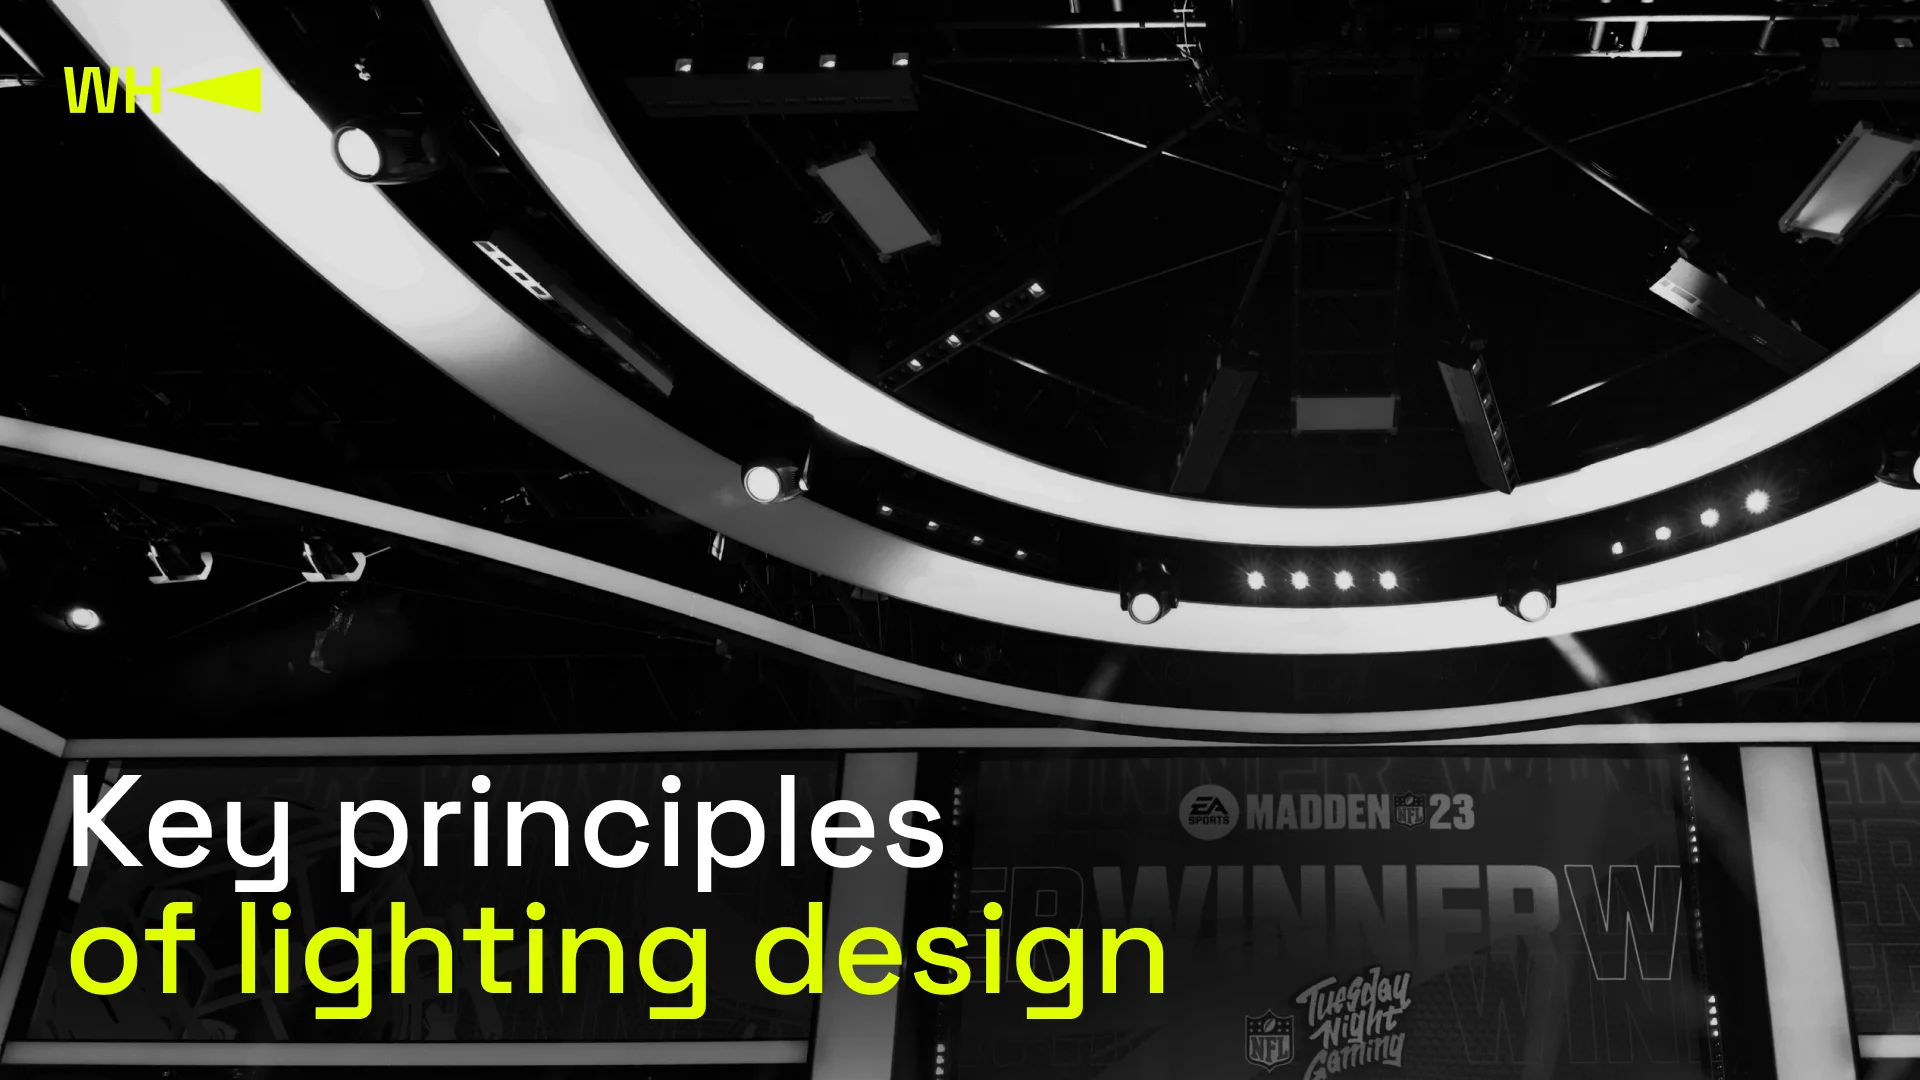 Key principles of lighting design. Credit: WePlay Holding